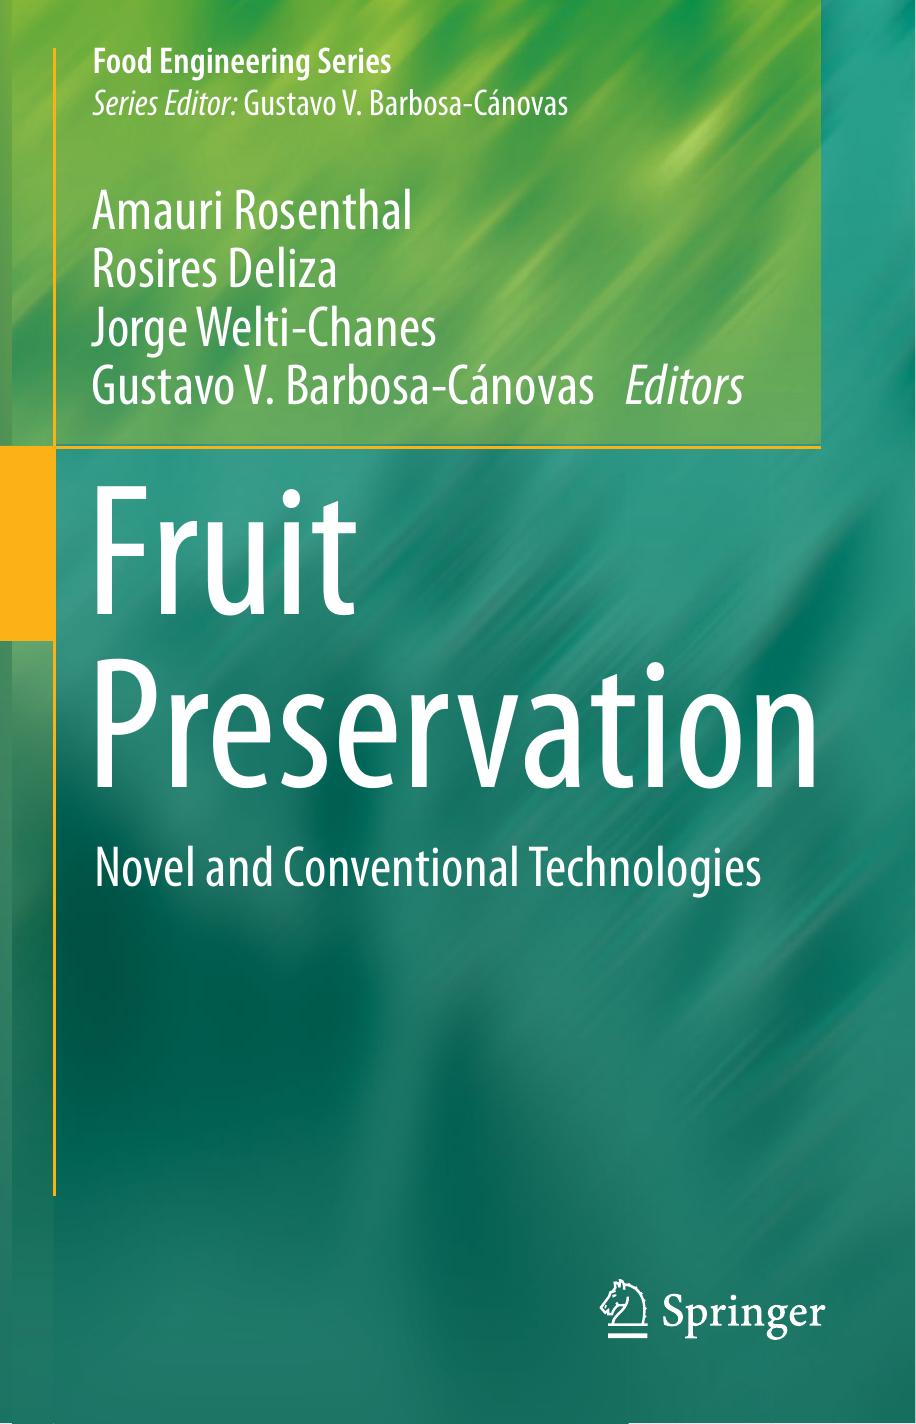 Fruit Preservation  Novel and Conventional Technologies-Springer New York (2018)